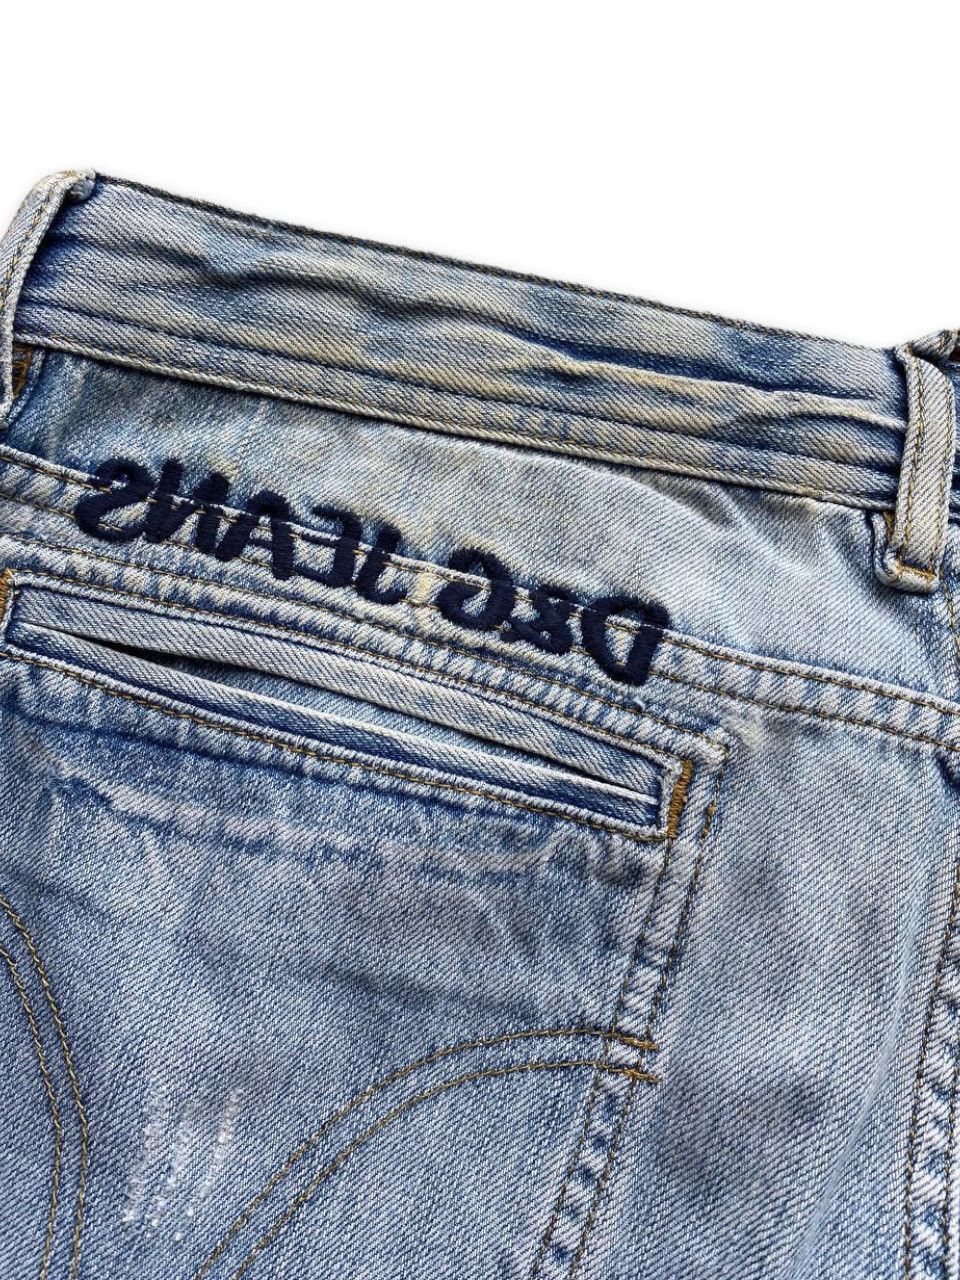 Dolce & Gabbana Dolce & Gabbana Audacious Straight Jeans Denim Pants Size US 36 / EU 52 - 9 Thumbnail